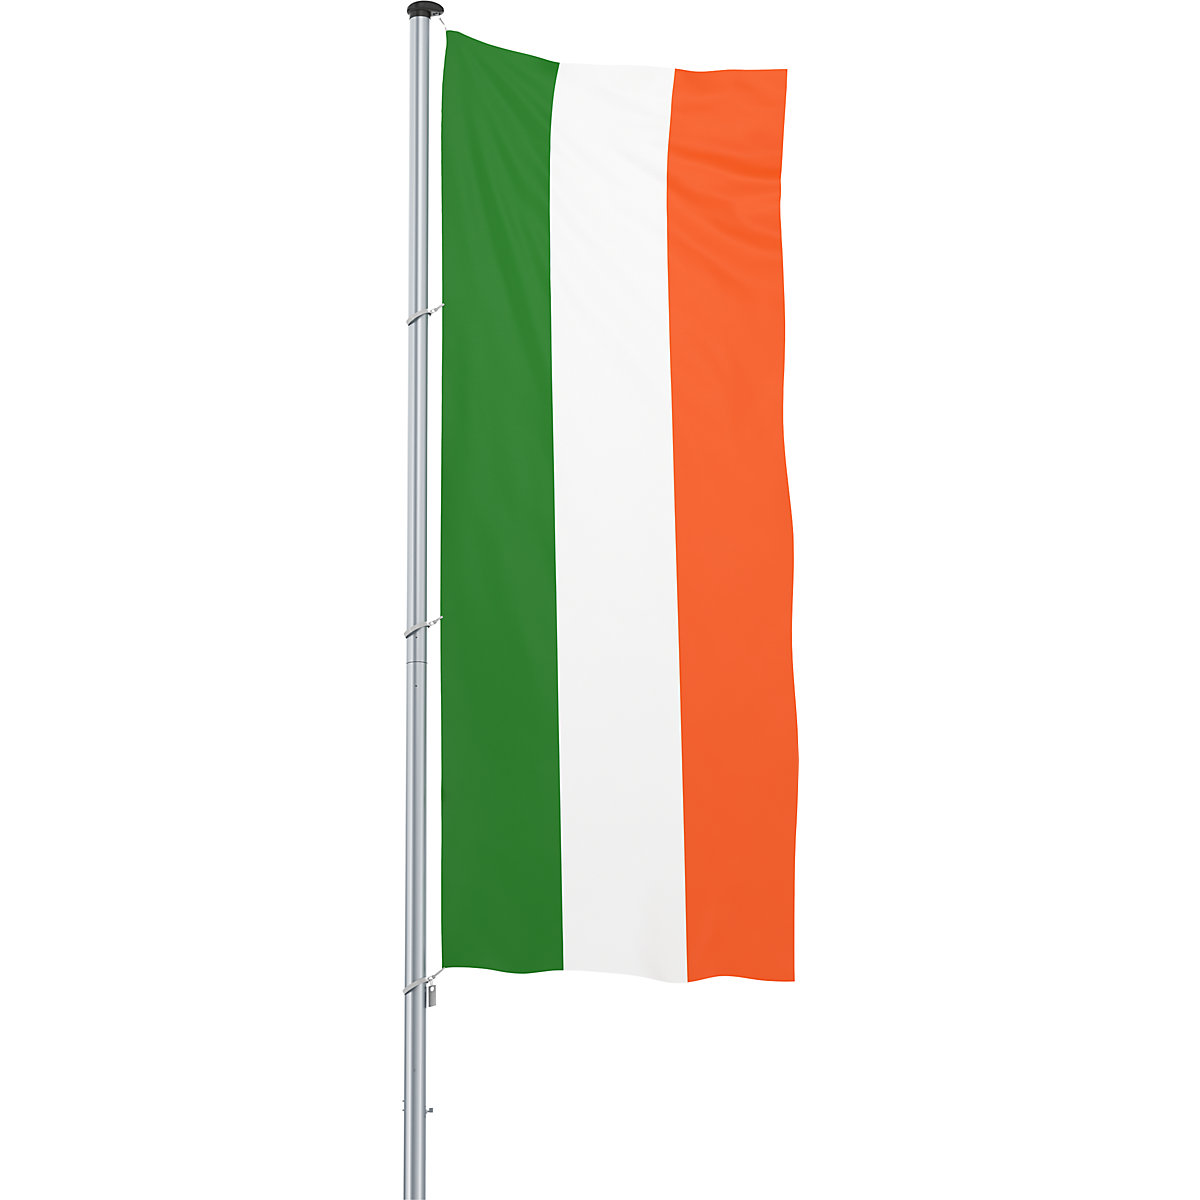 Mannus – Bandera para izar/bandera del país, formato 1,2 x 3 m, Irlanda